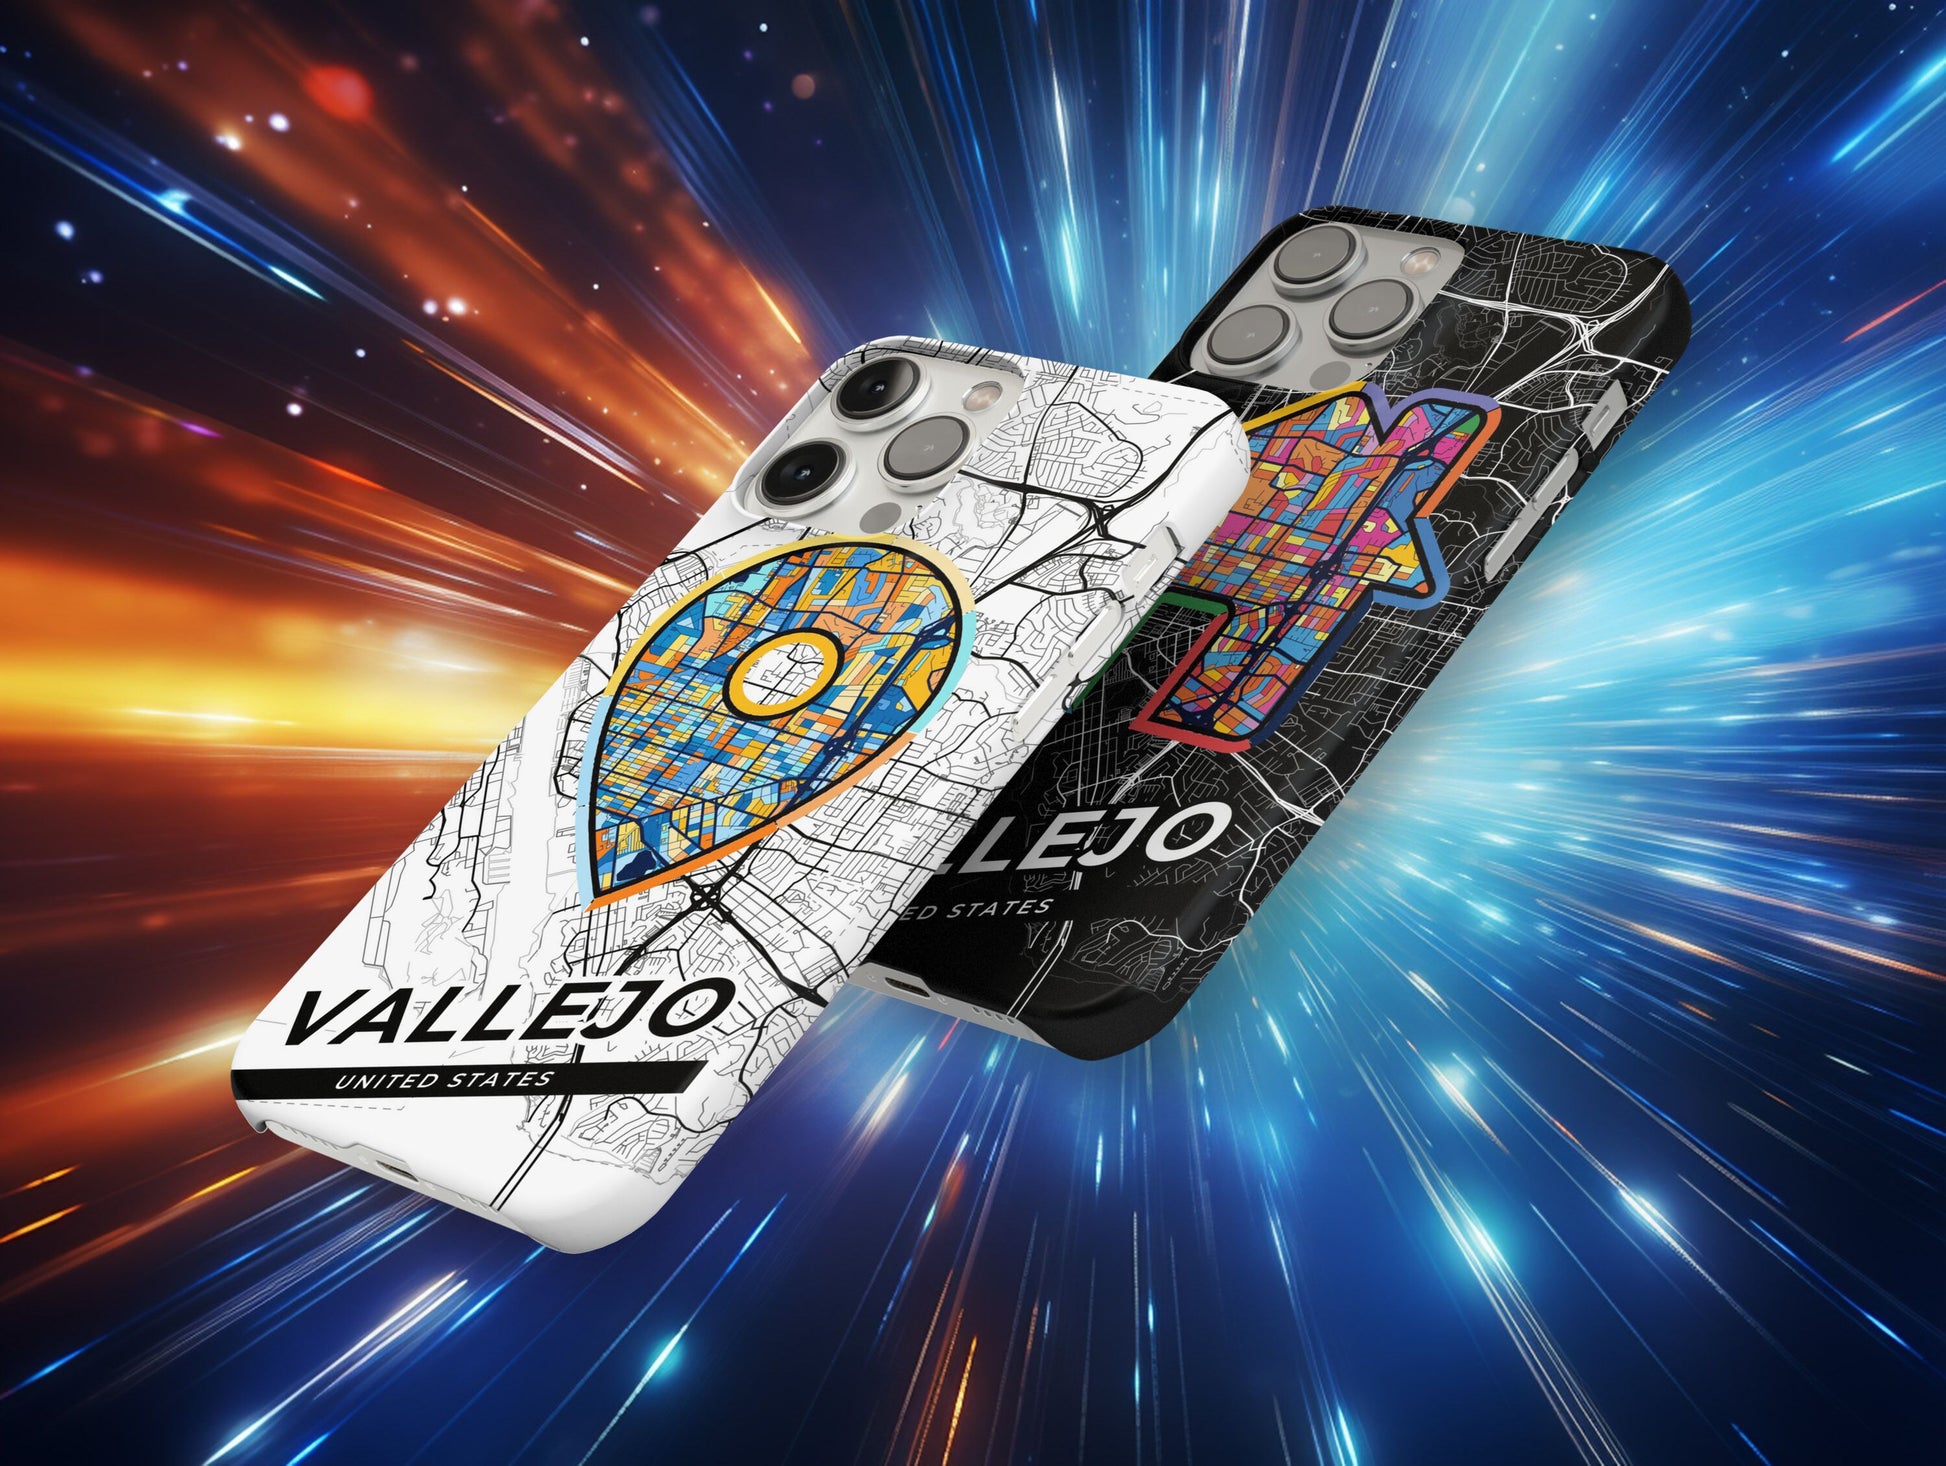 Vallejo California slim phone case with colorful icon